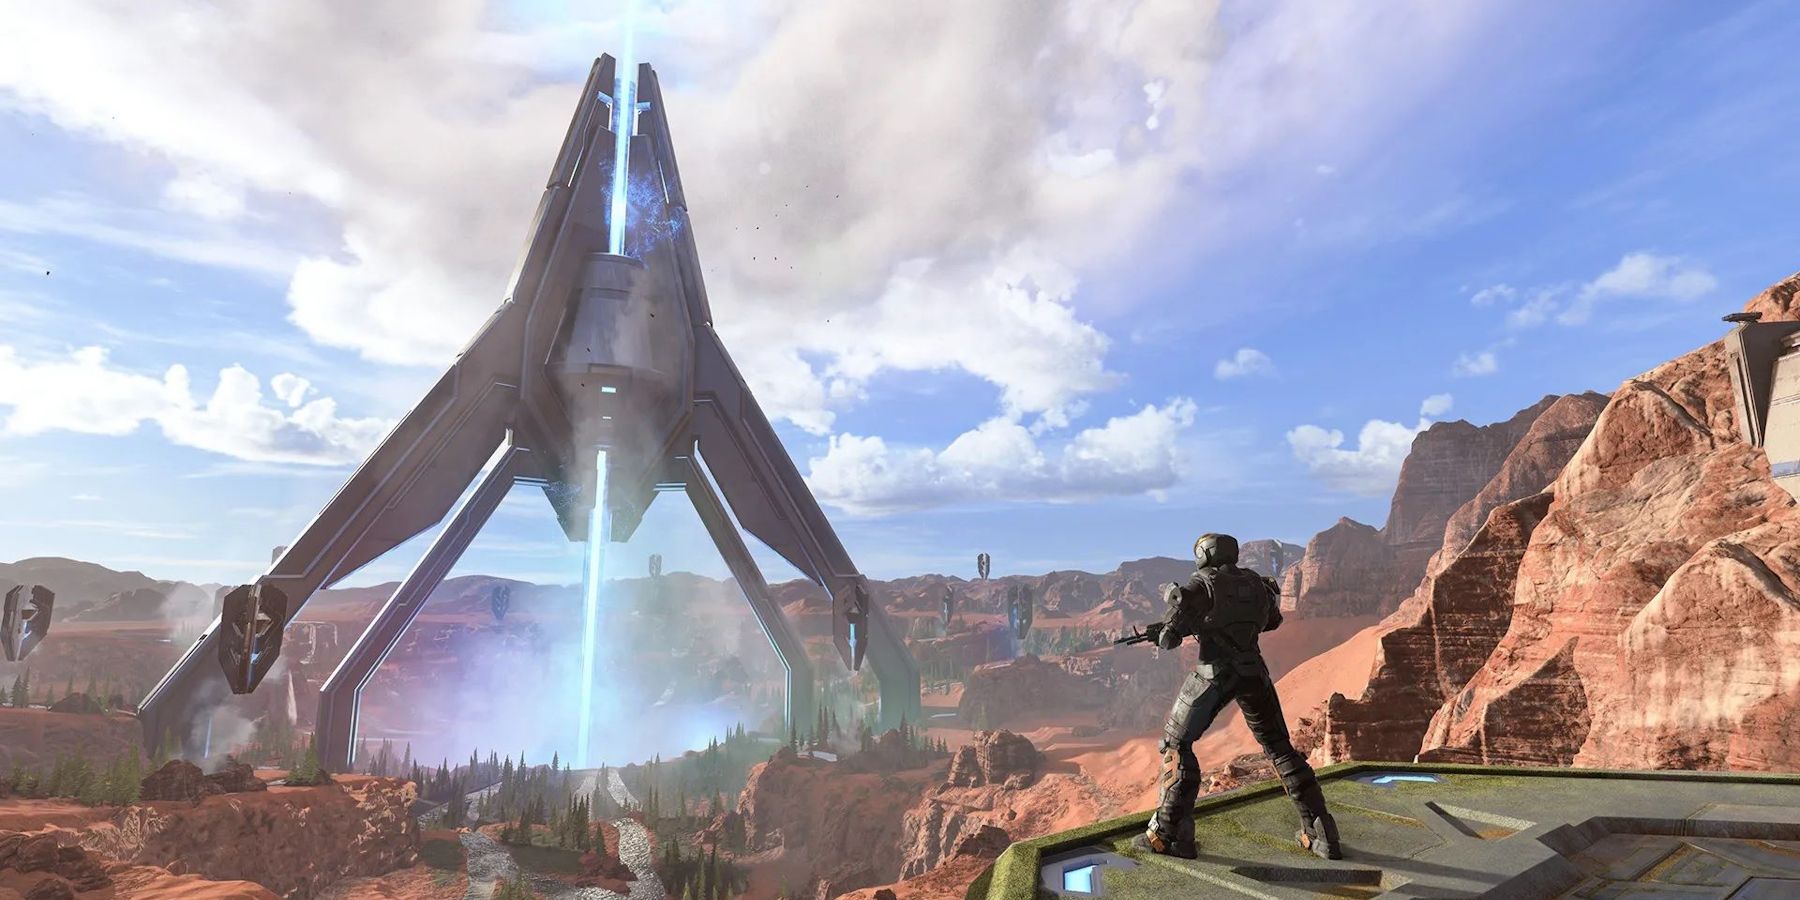 Promo screenshot from Halo Infinite